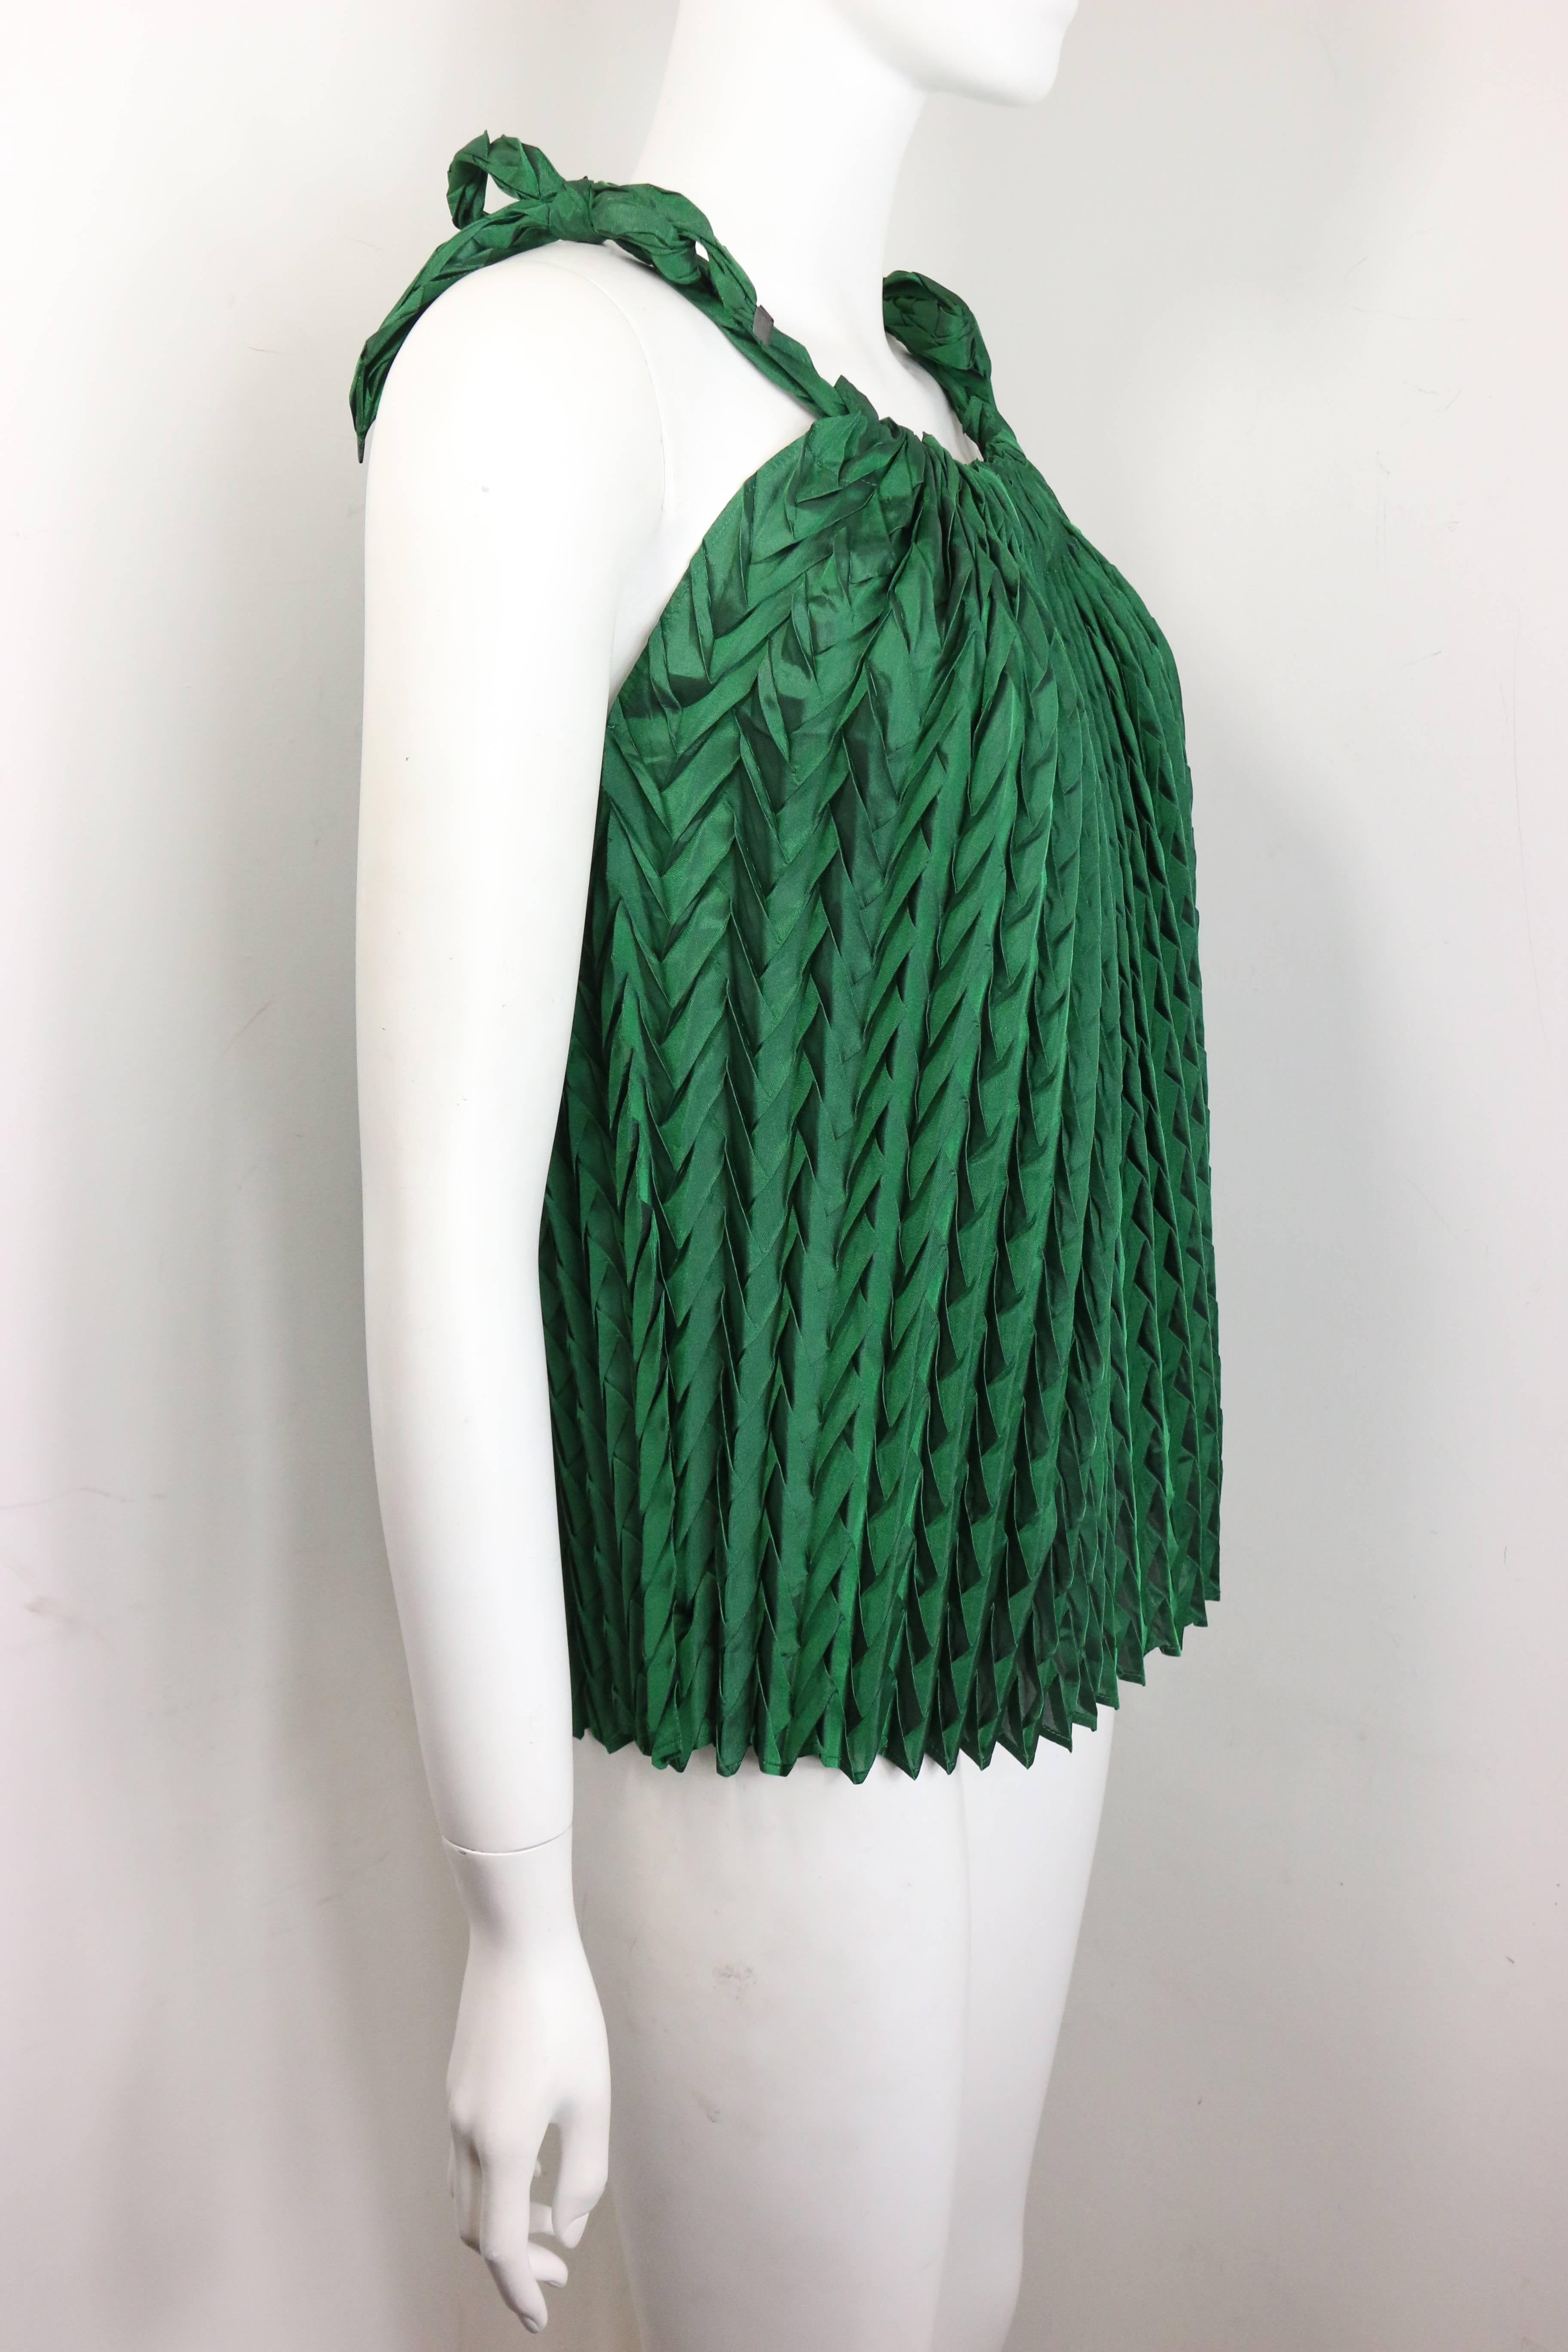 - Vintage 90s Issey Miyake green pleated sleeveless top. 

- Drawstring spaghetti strap.

- 